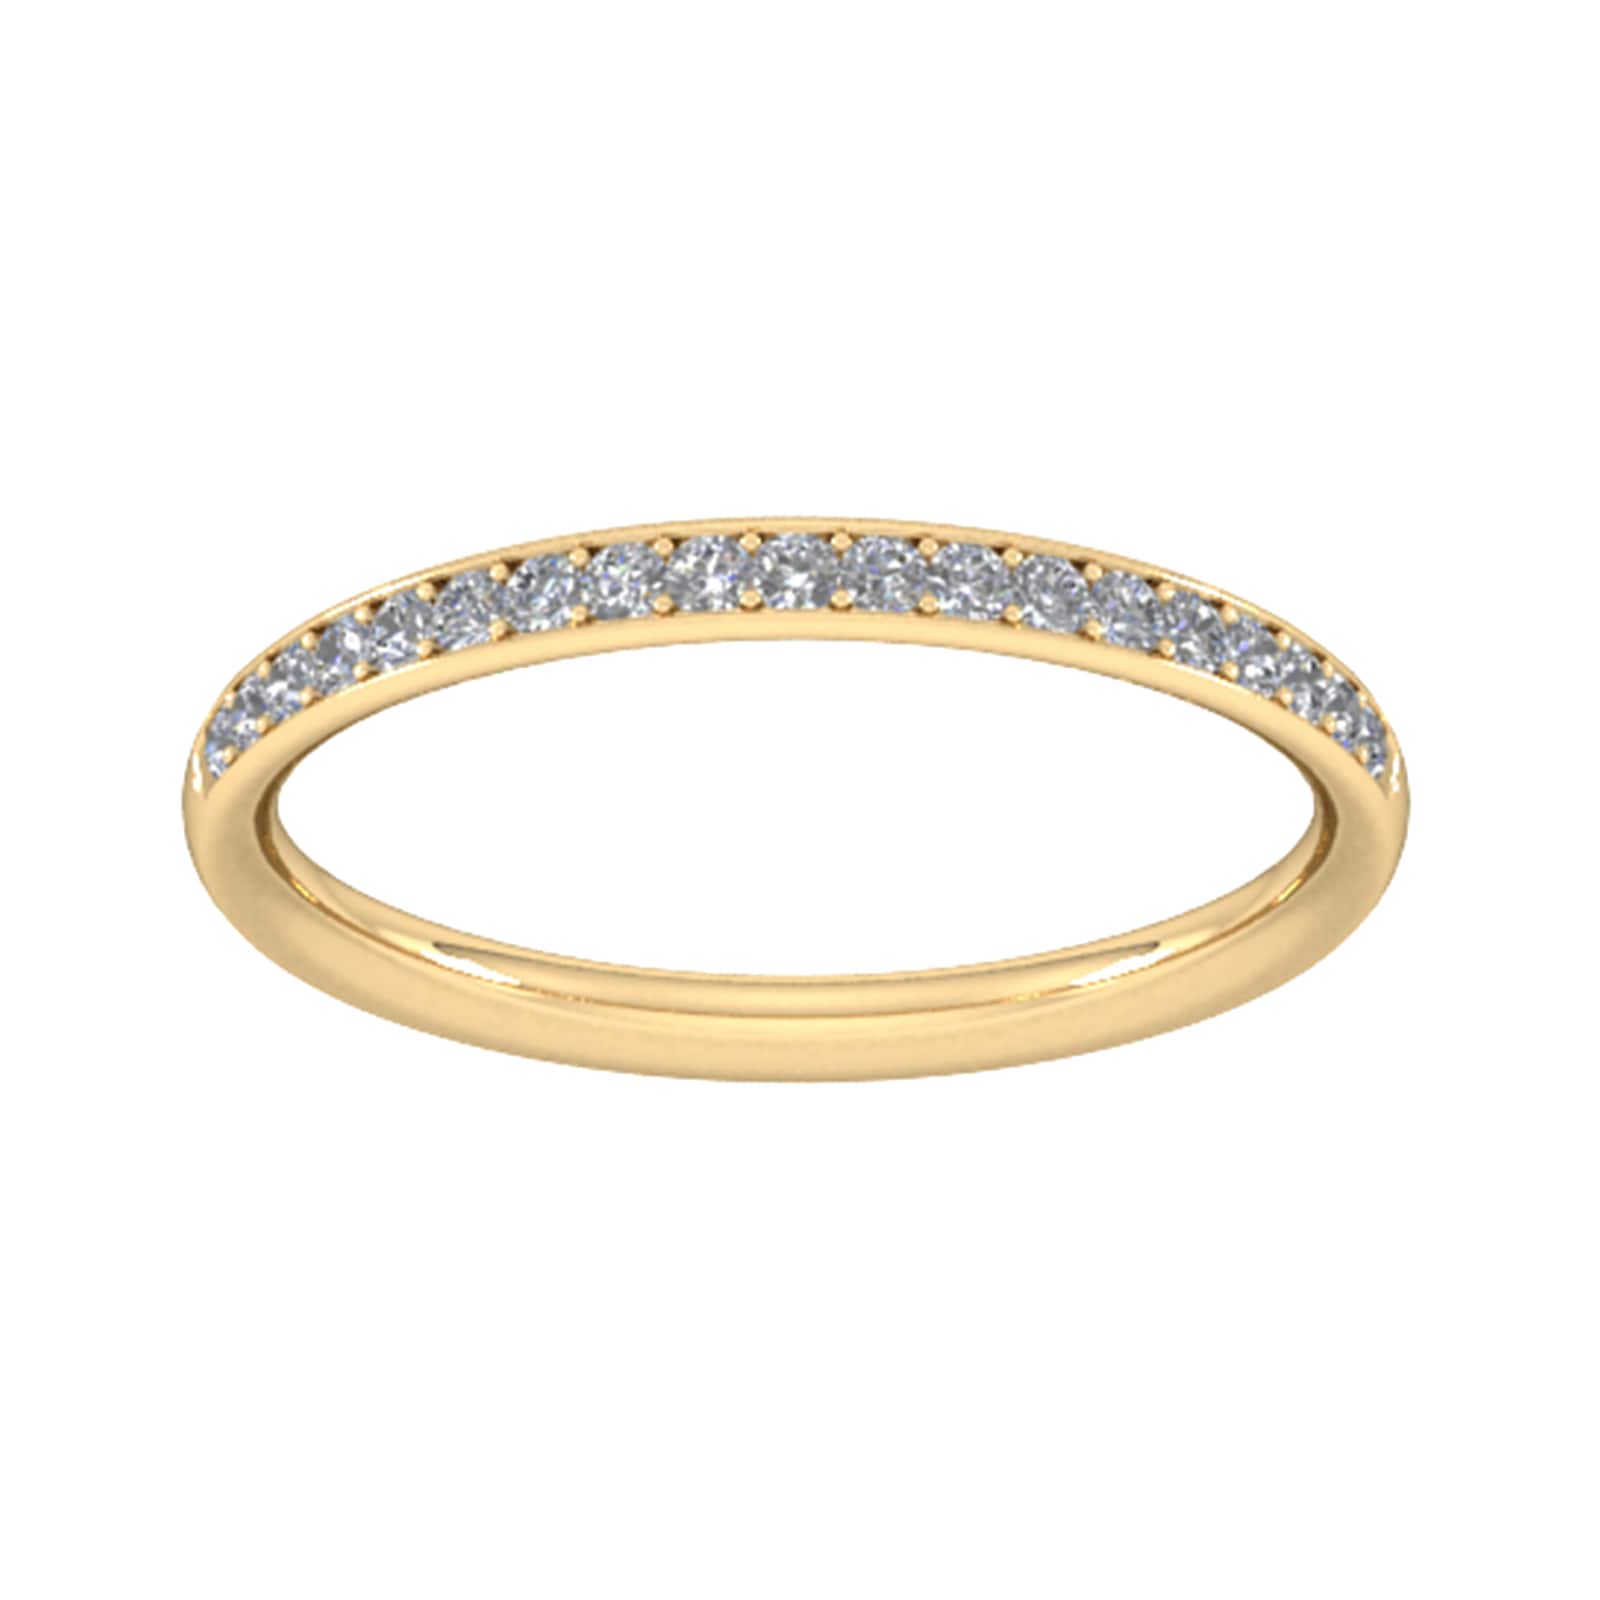 0.18 Carat Total Weight Brilliant Cut Grain Set Diamond Wedding Ring In 9 Carat Yellow Gold - Ring Size W